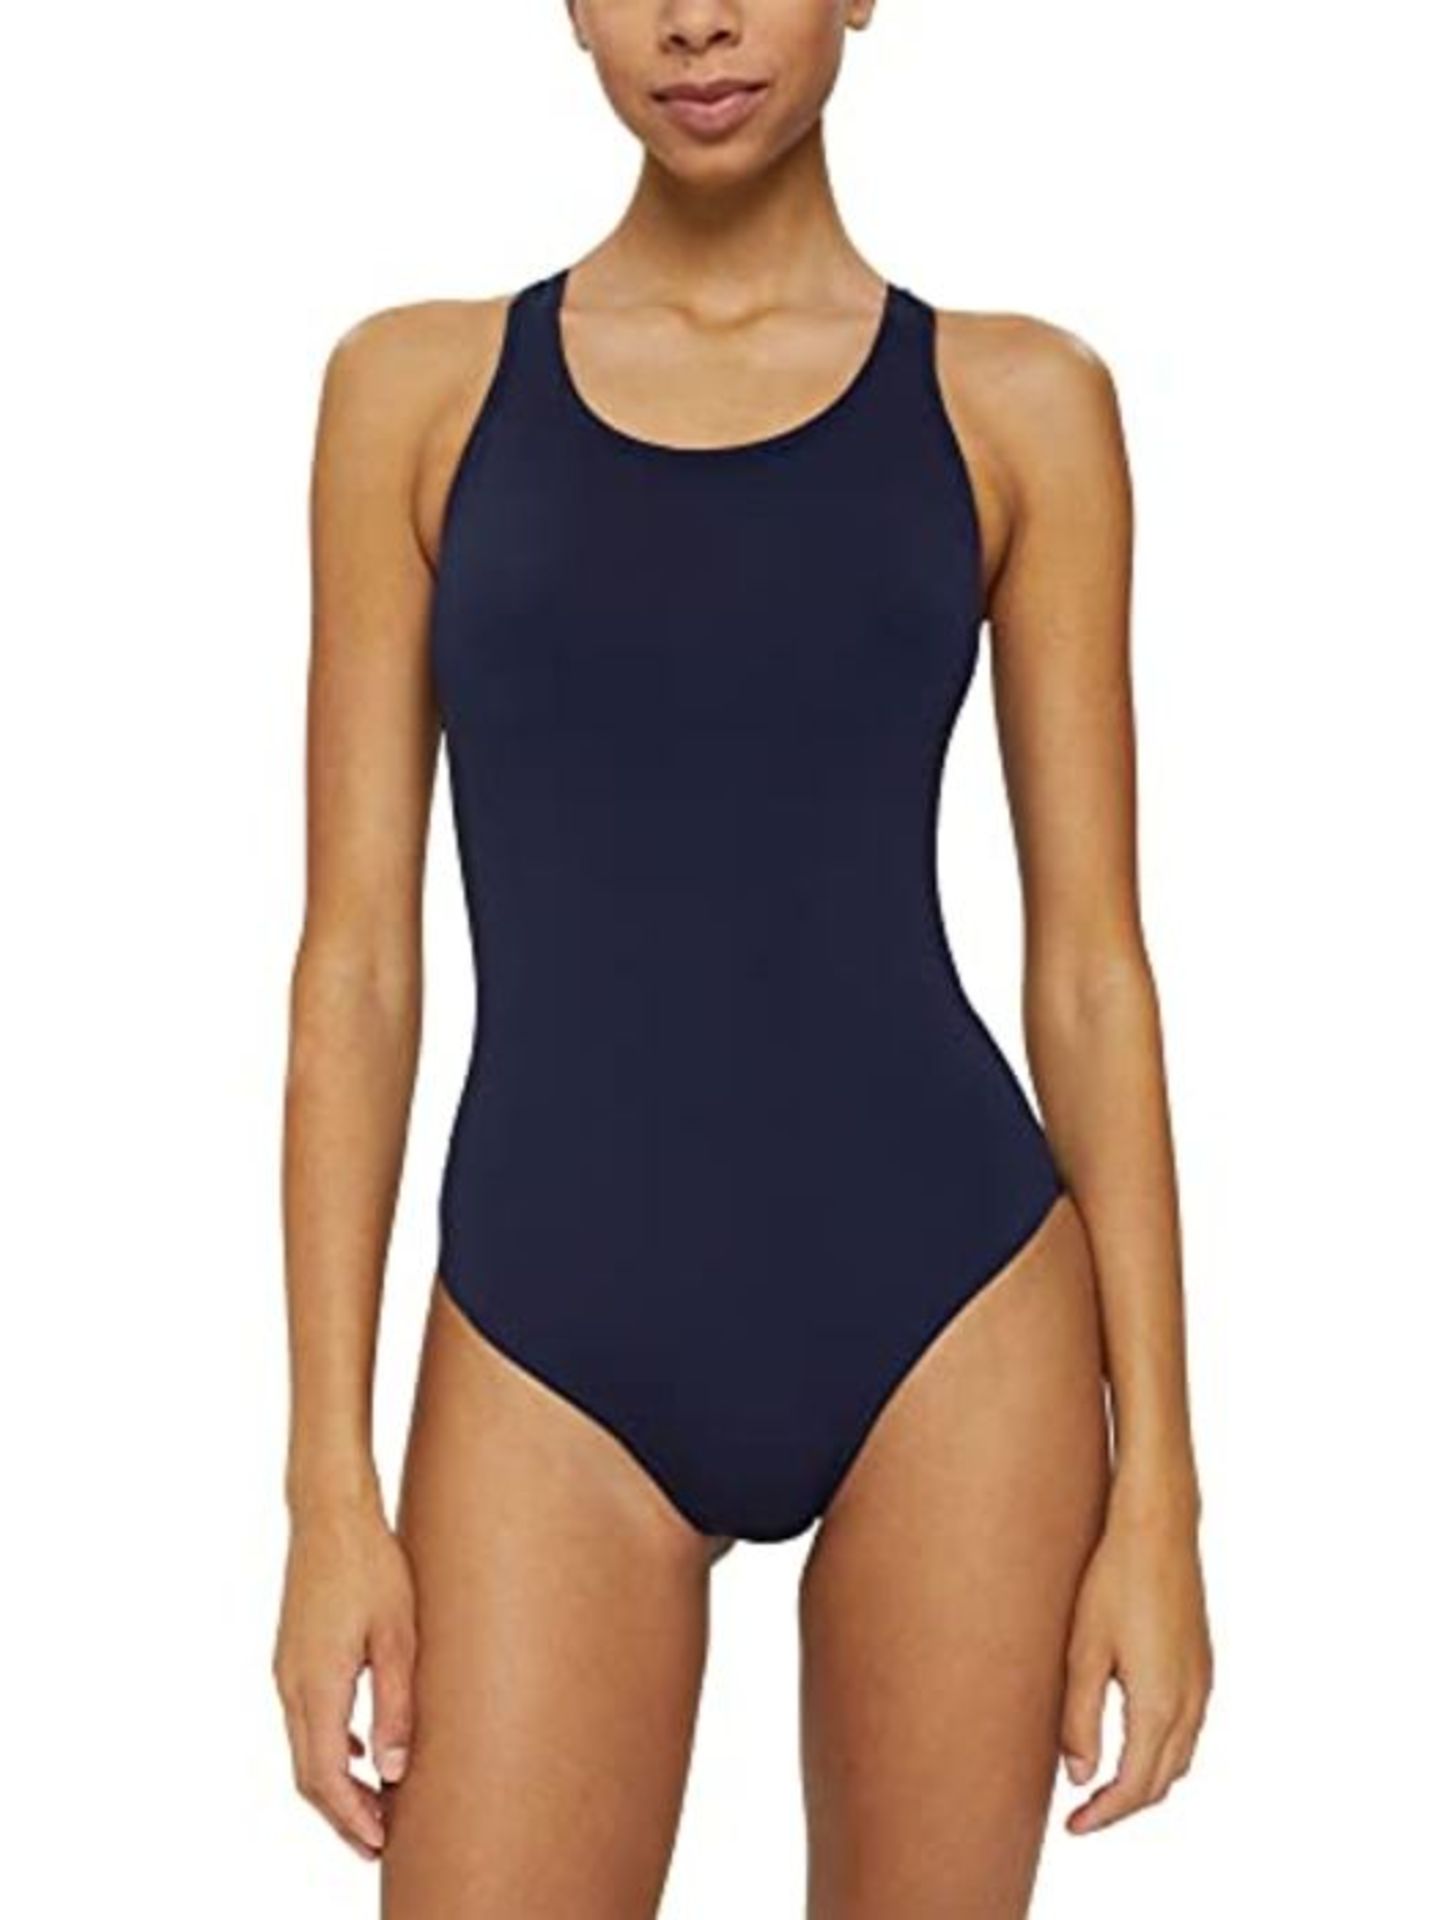 ESPRIT Bodywear Women's TURA Beach AY RCS Swimsuit One Piece, Navy, 44